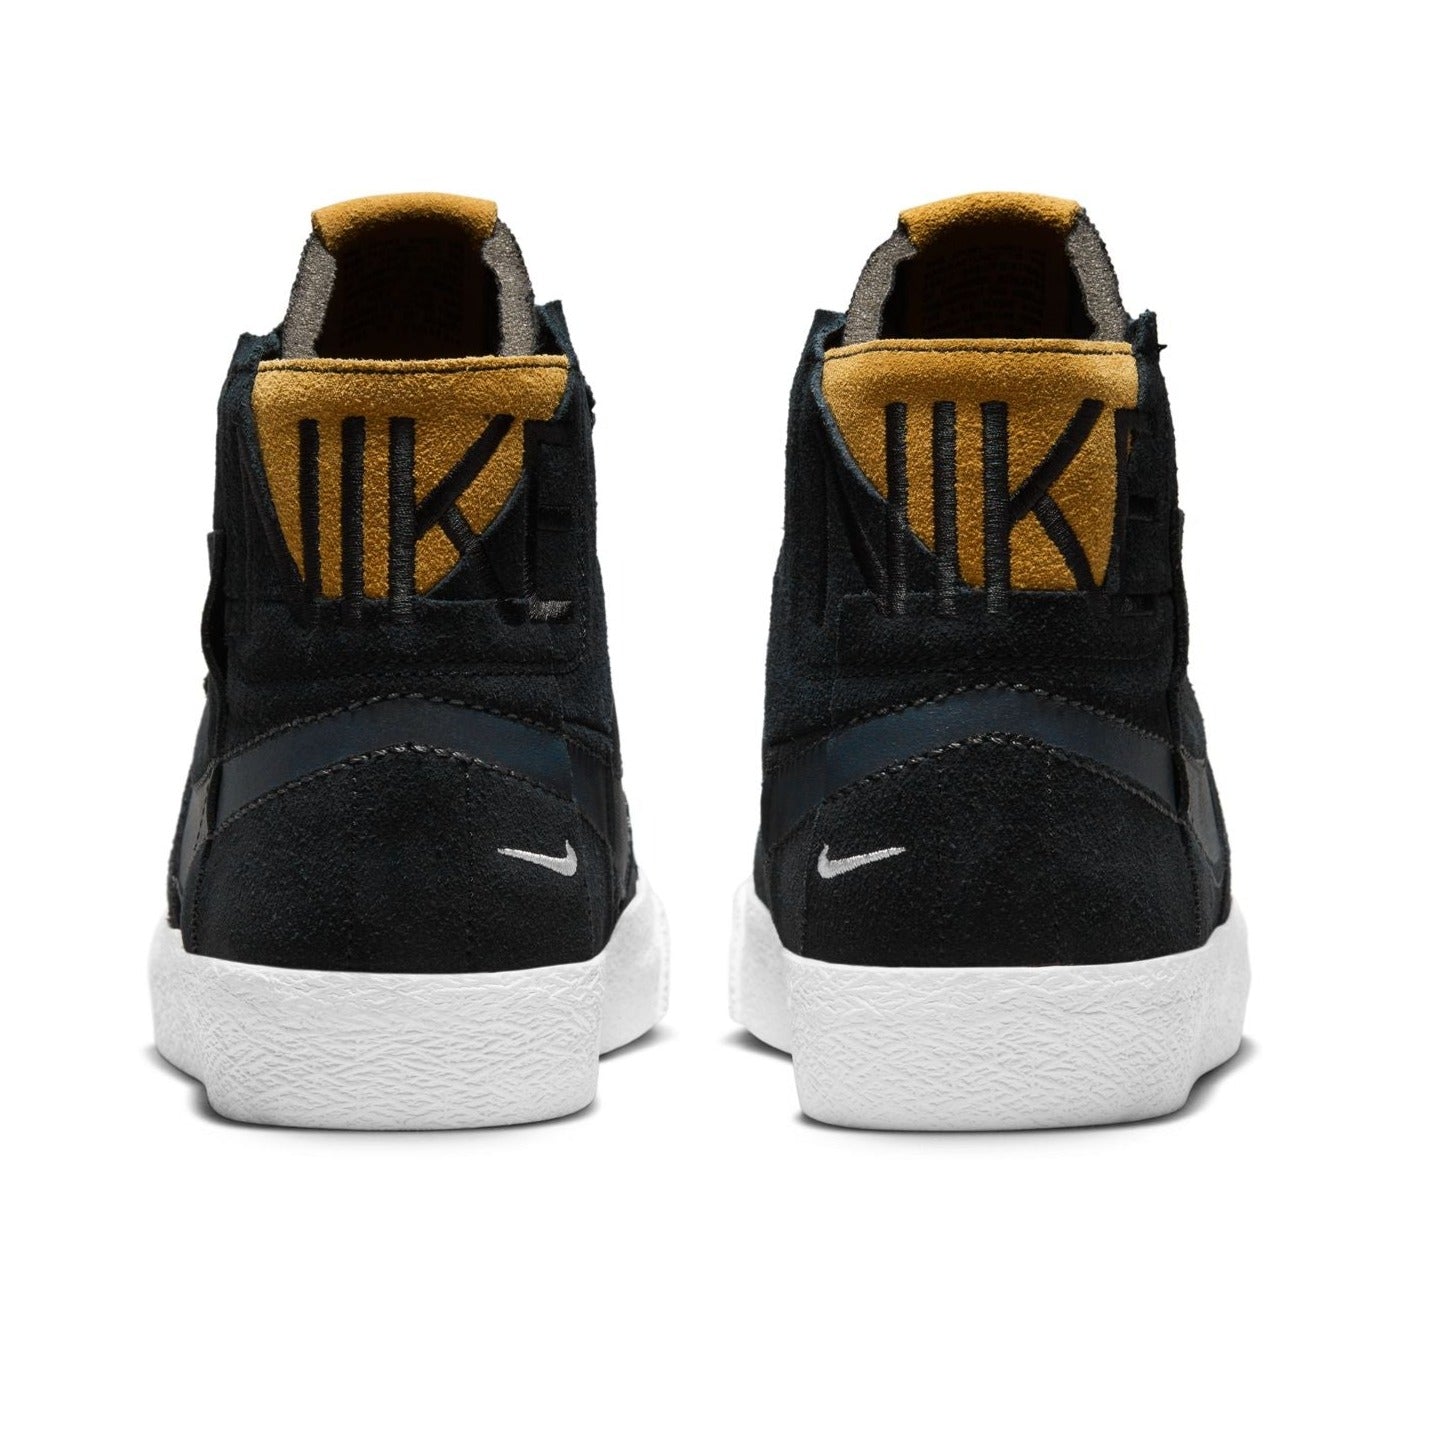 Black Blazer Mid Premium Nike SB Skate Shoe Back